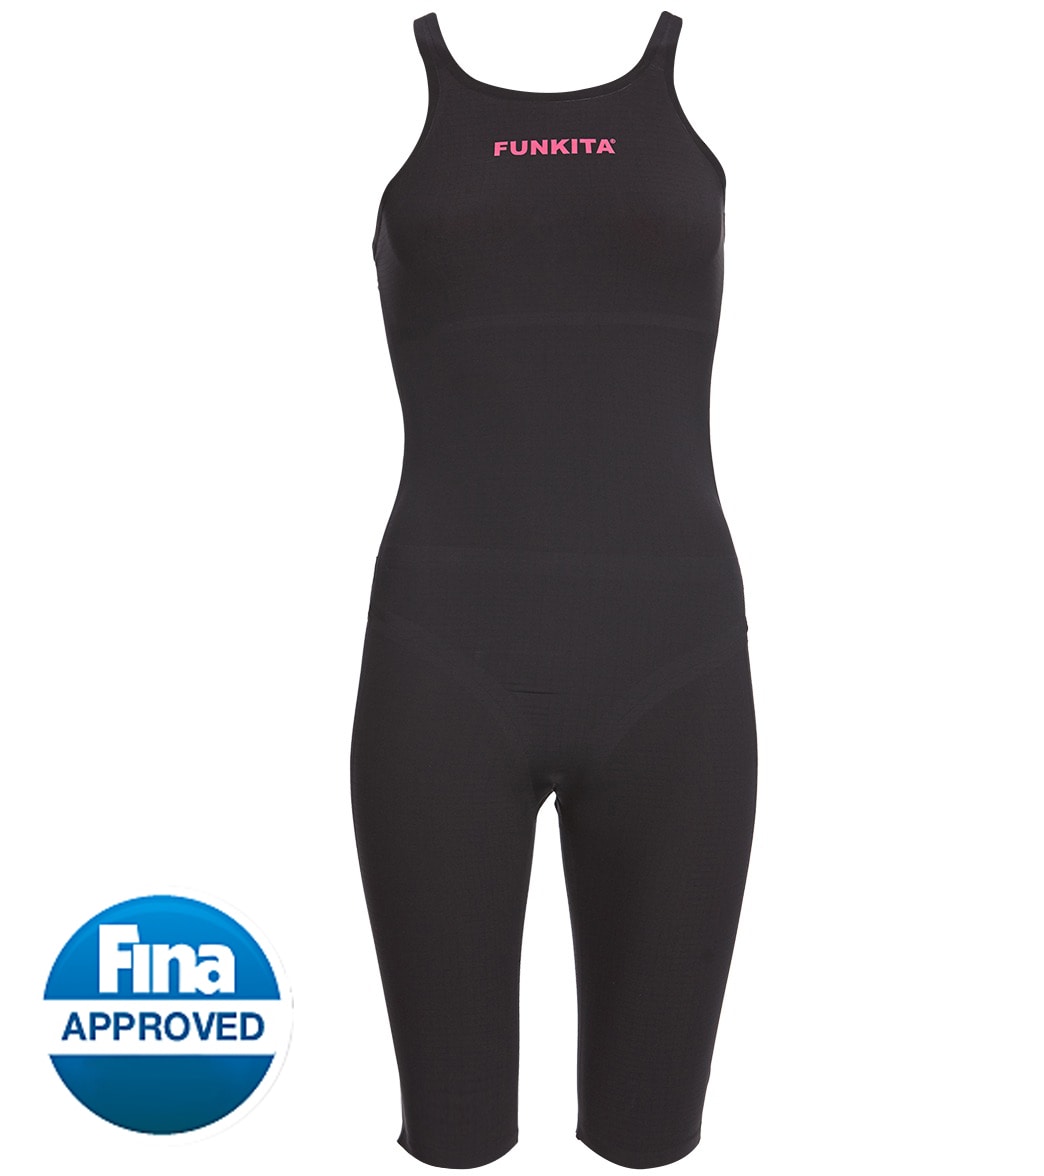 Funkita Women's Apex Stealth Closed Back Kneeskin Tech Suit Swimsuit - Black 28 - Swimoutlet.com